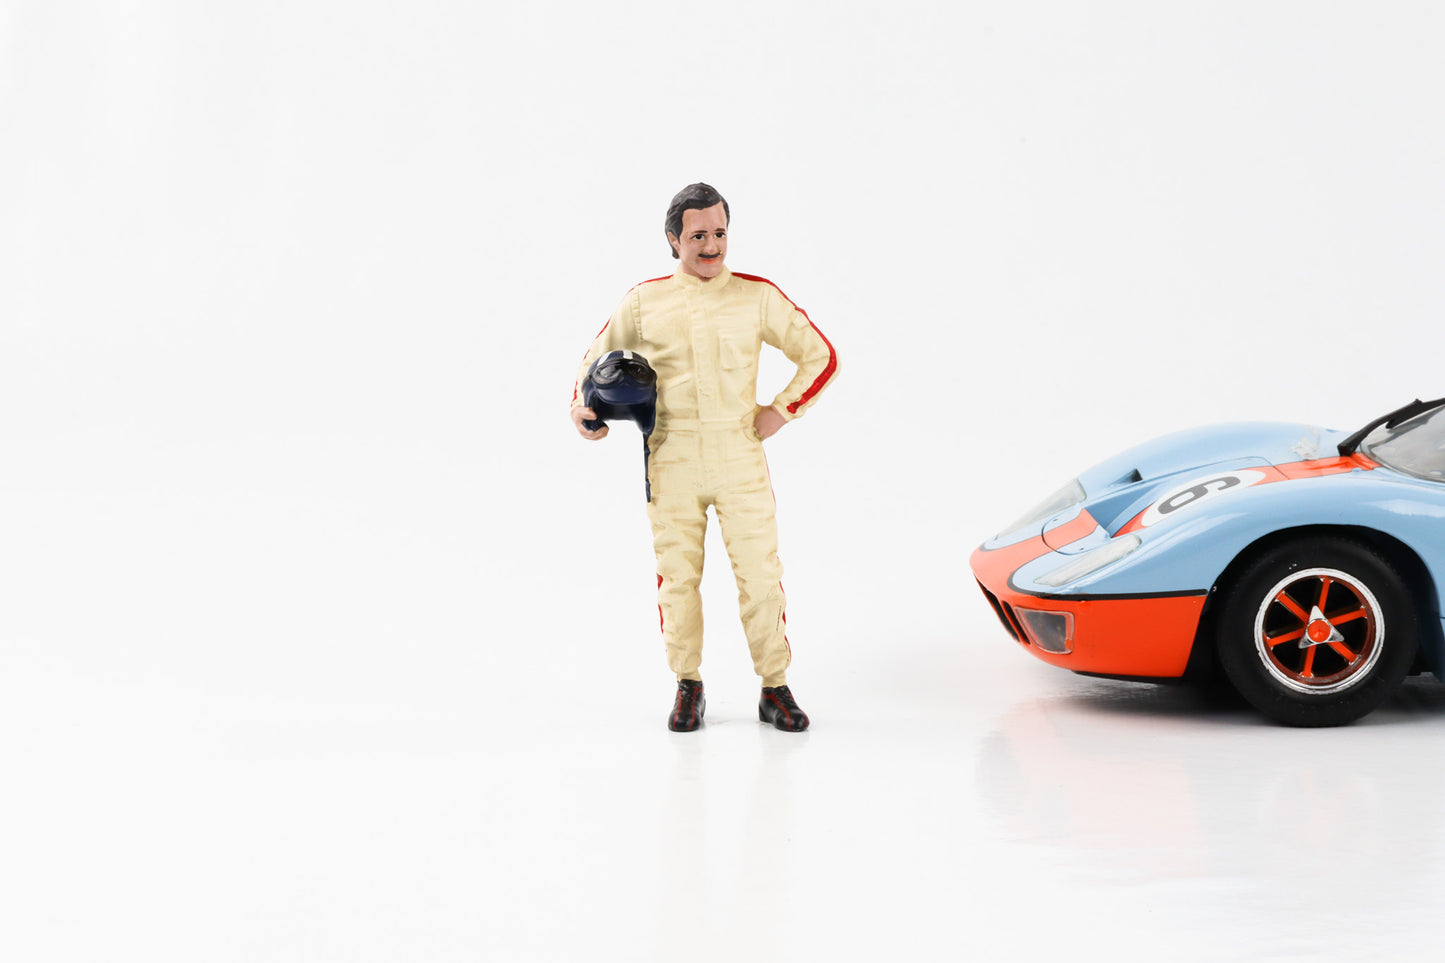 1:18 Figur Le Mans Racing Legend 60s Fahrer B beige American Diorama Figuren